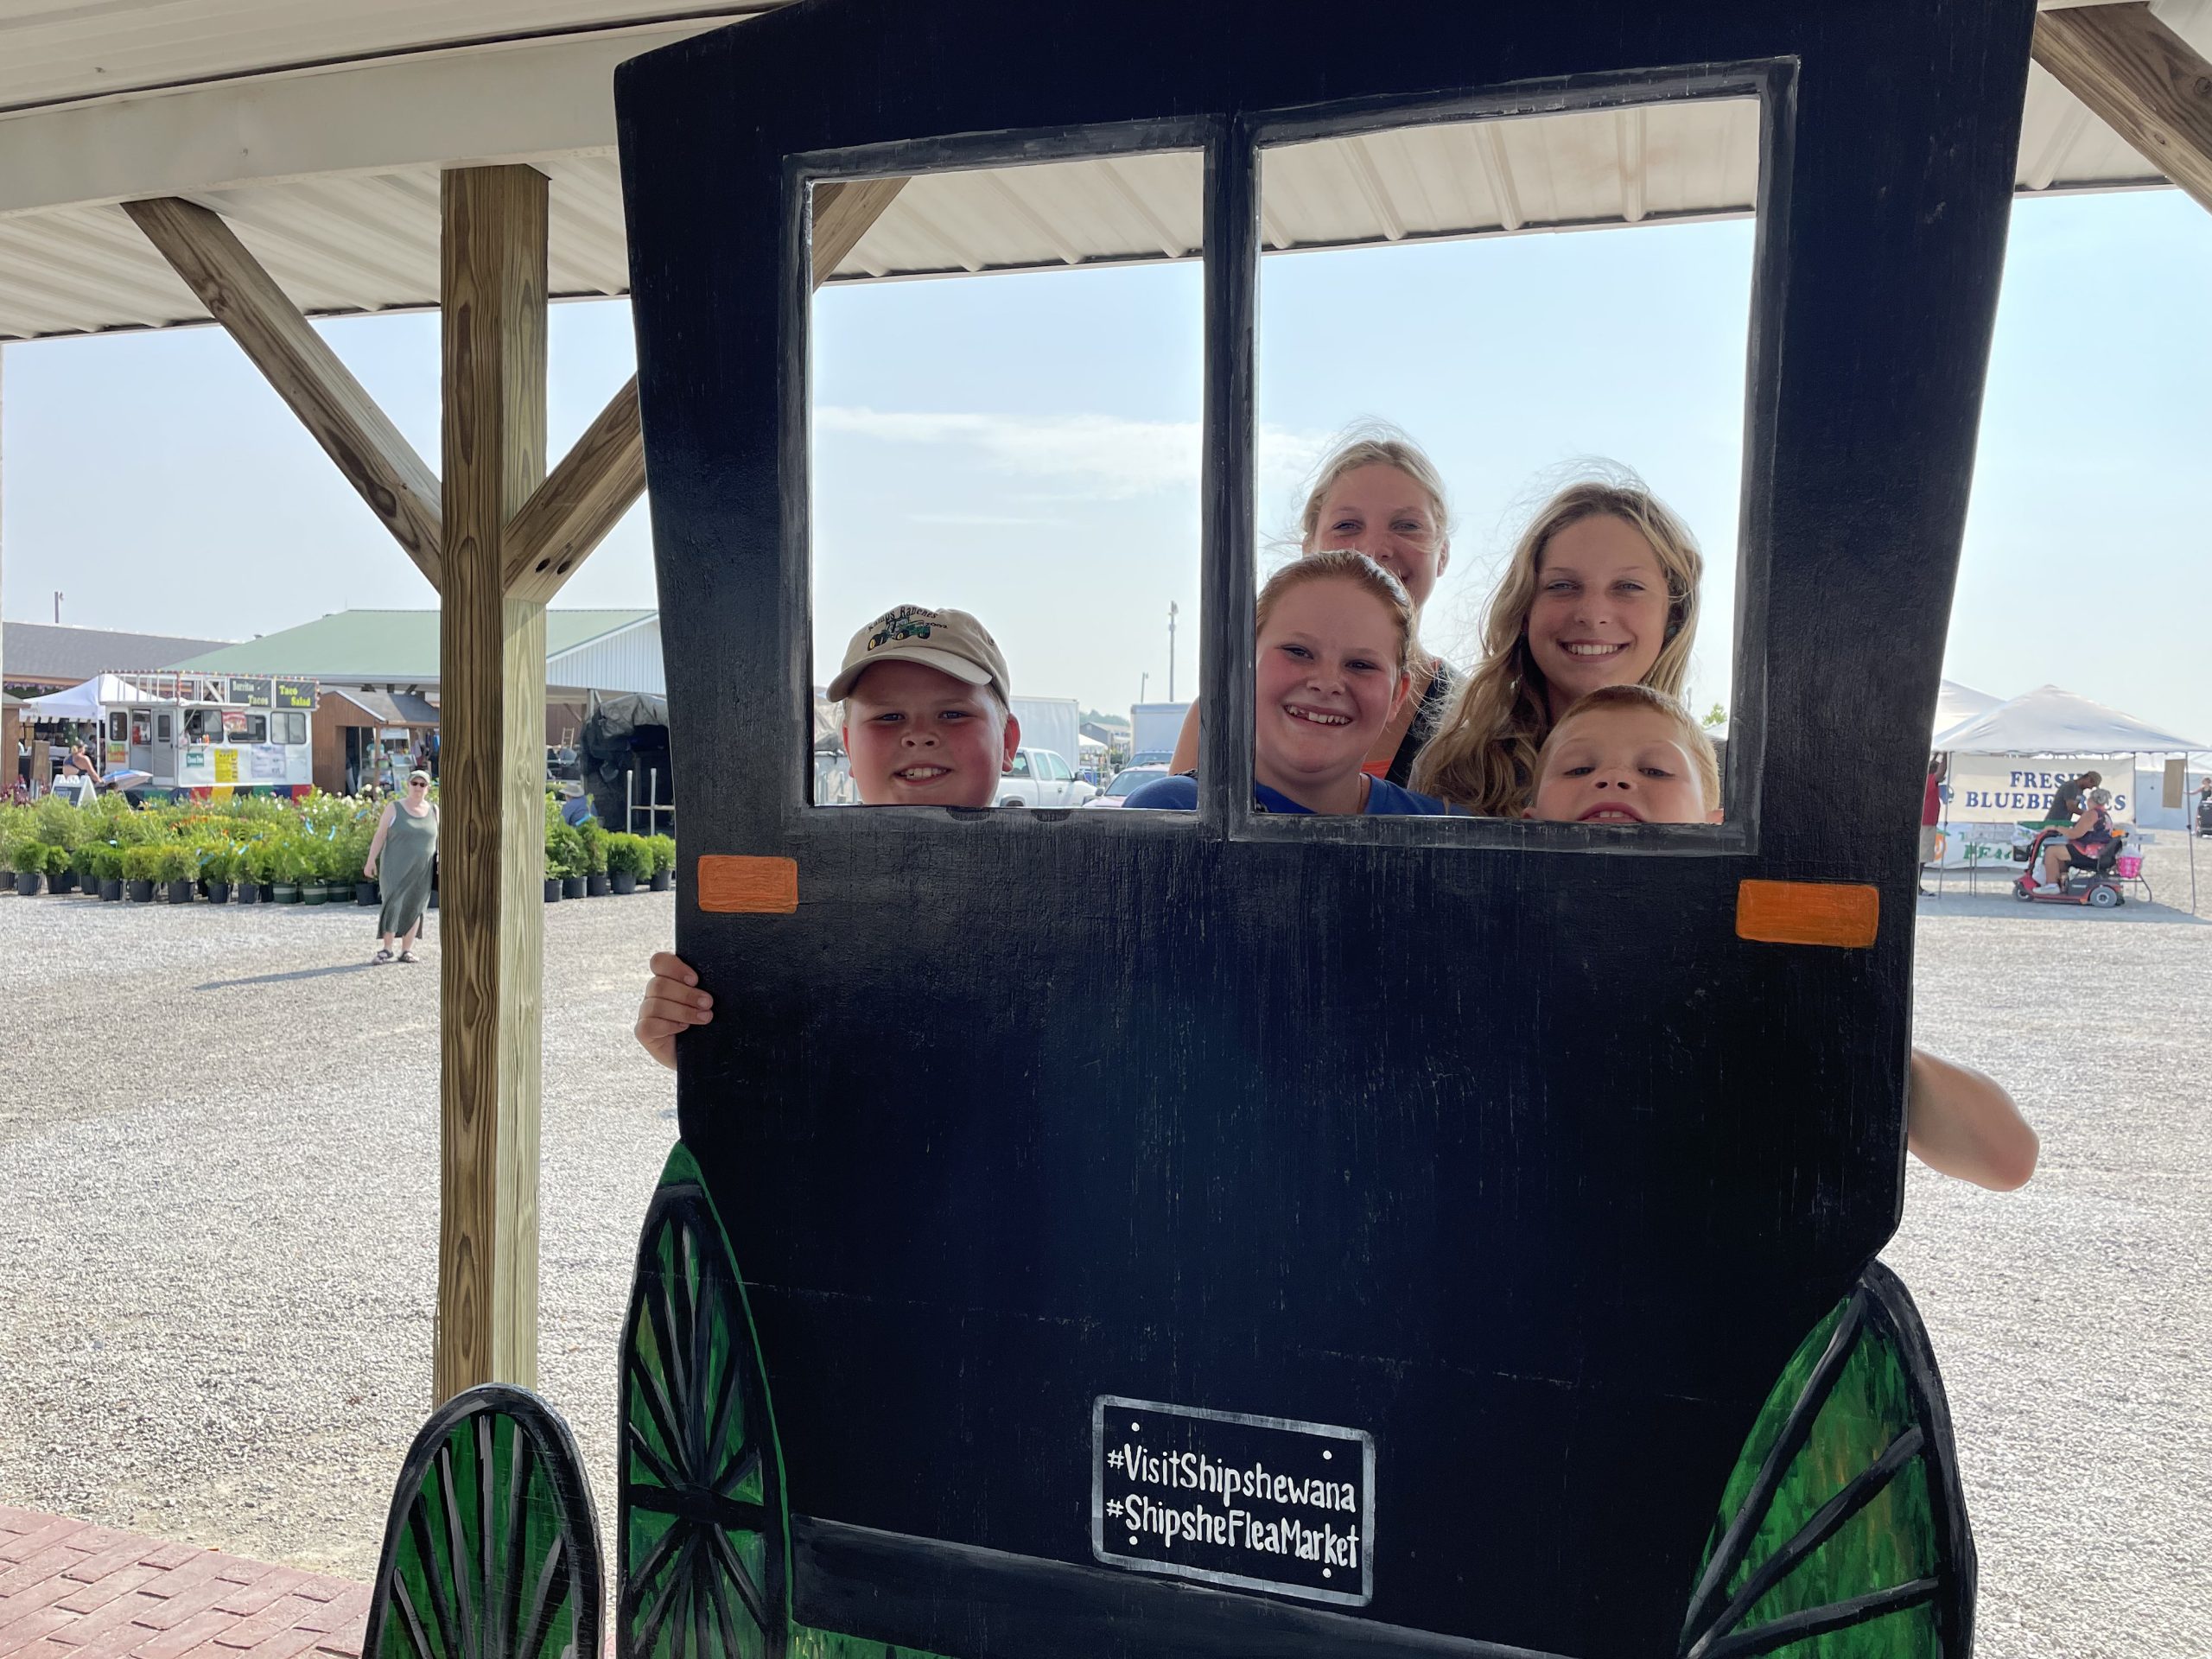 Kids posing behind an Amish buggy.